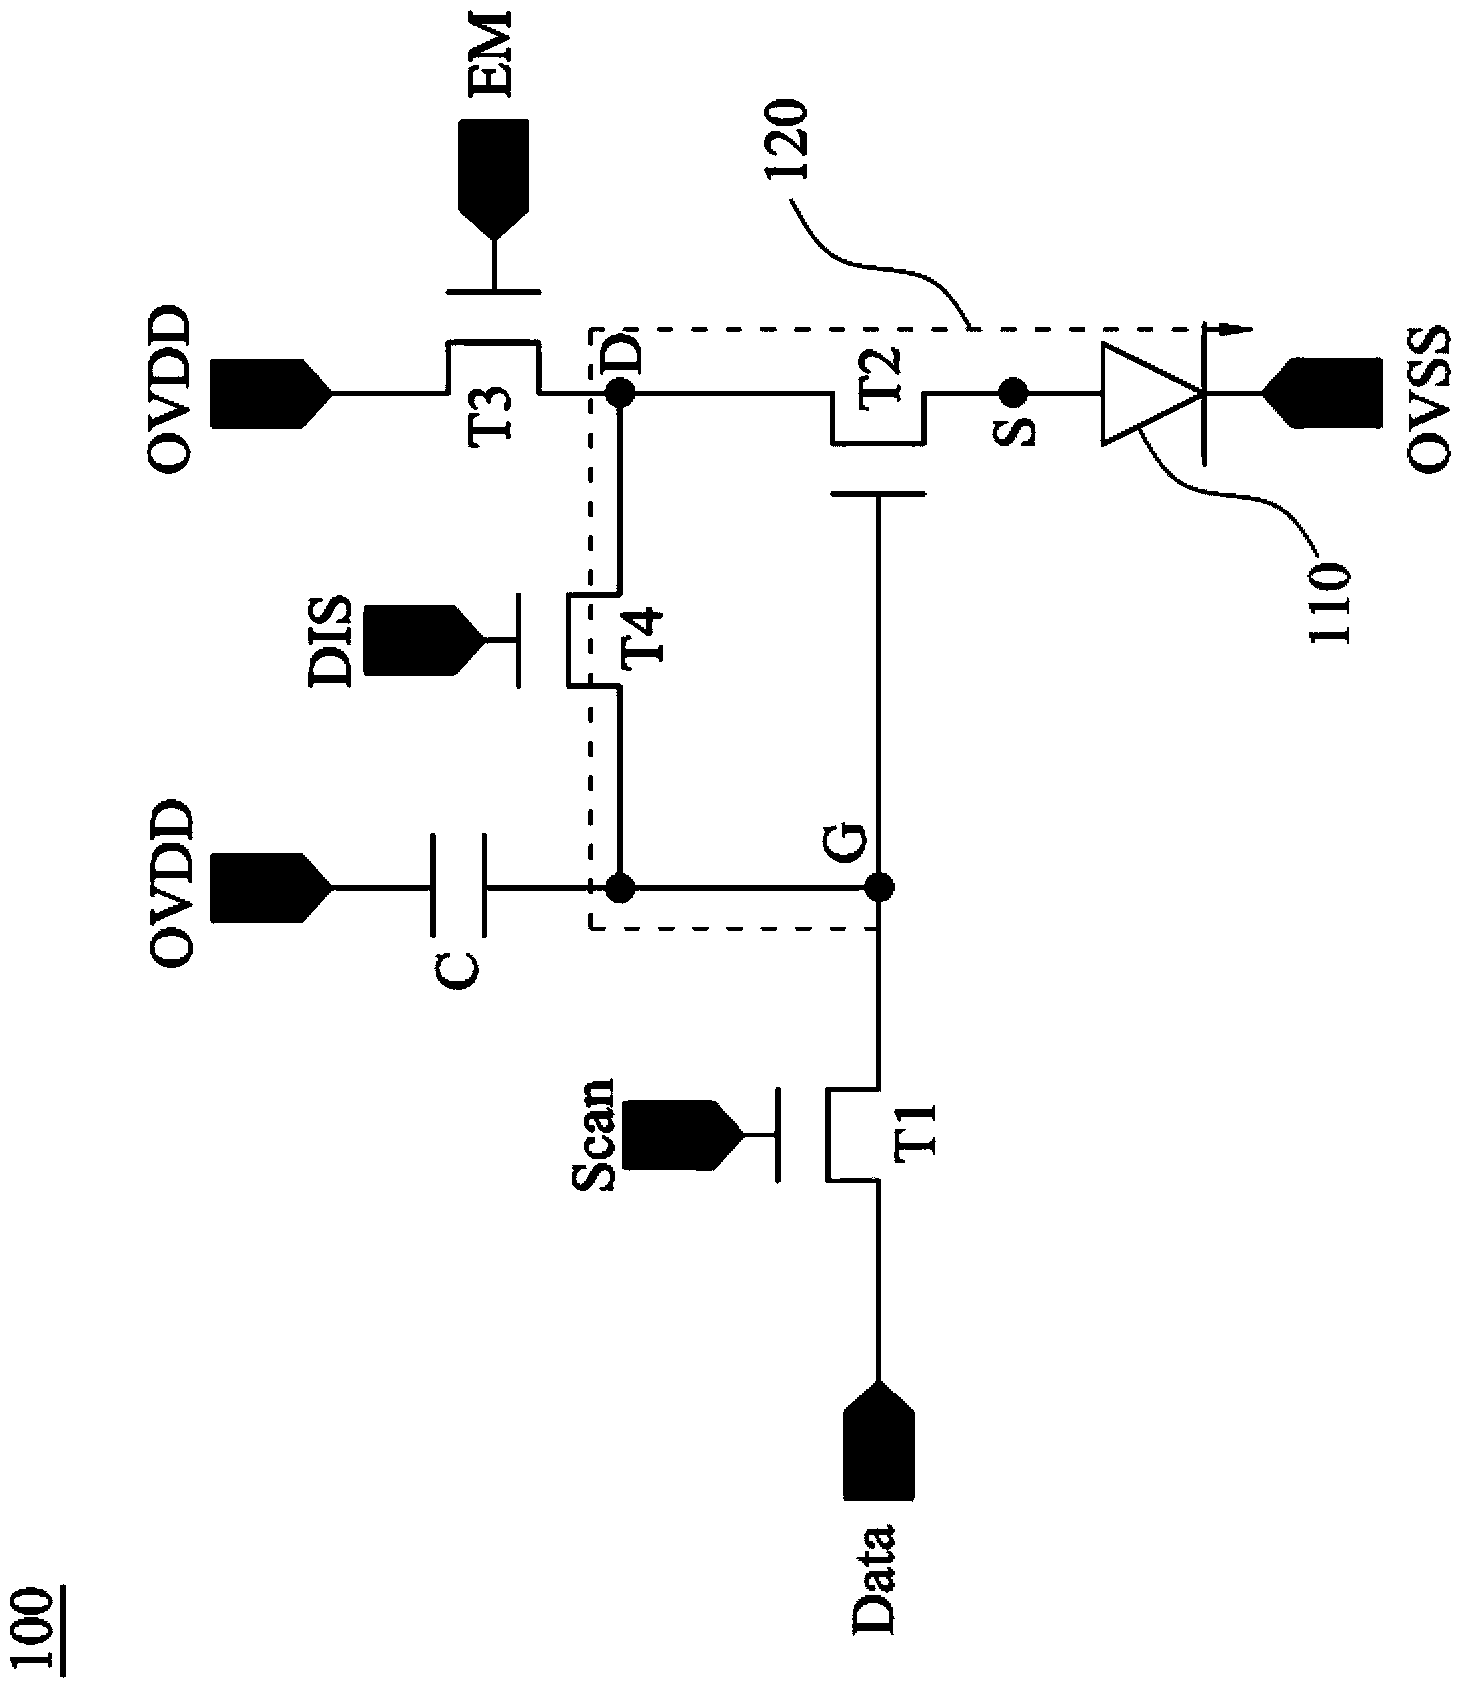 Pixel and pixel circuit